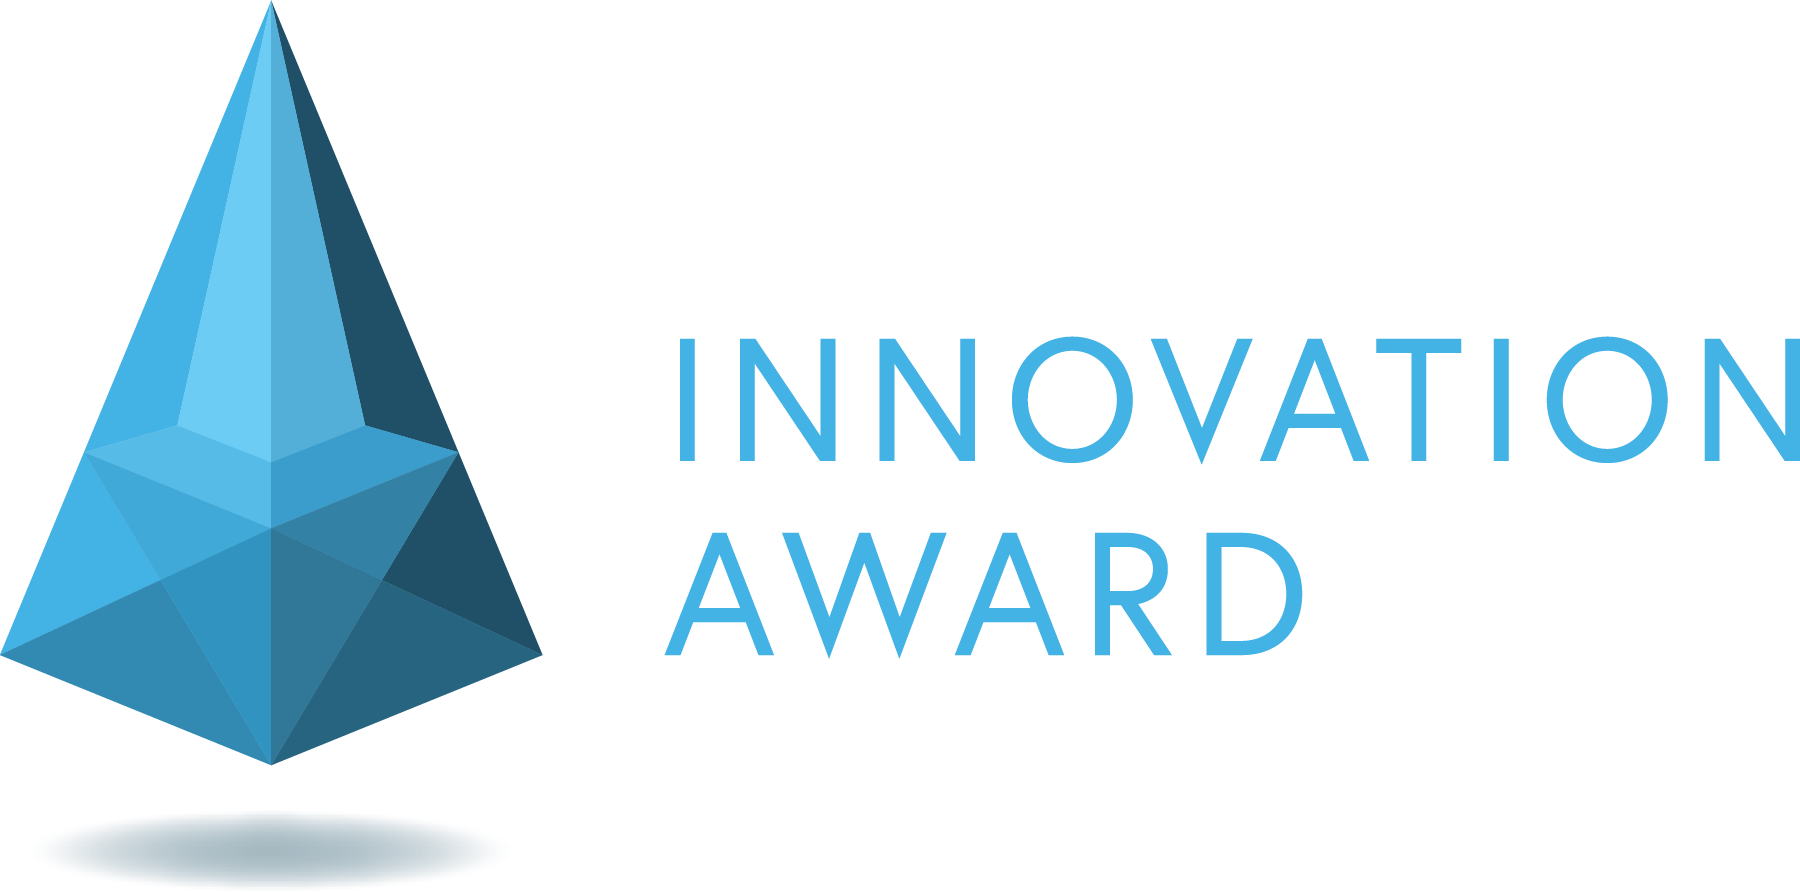 Symphony Innovation Award Logo PNG image